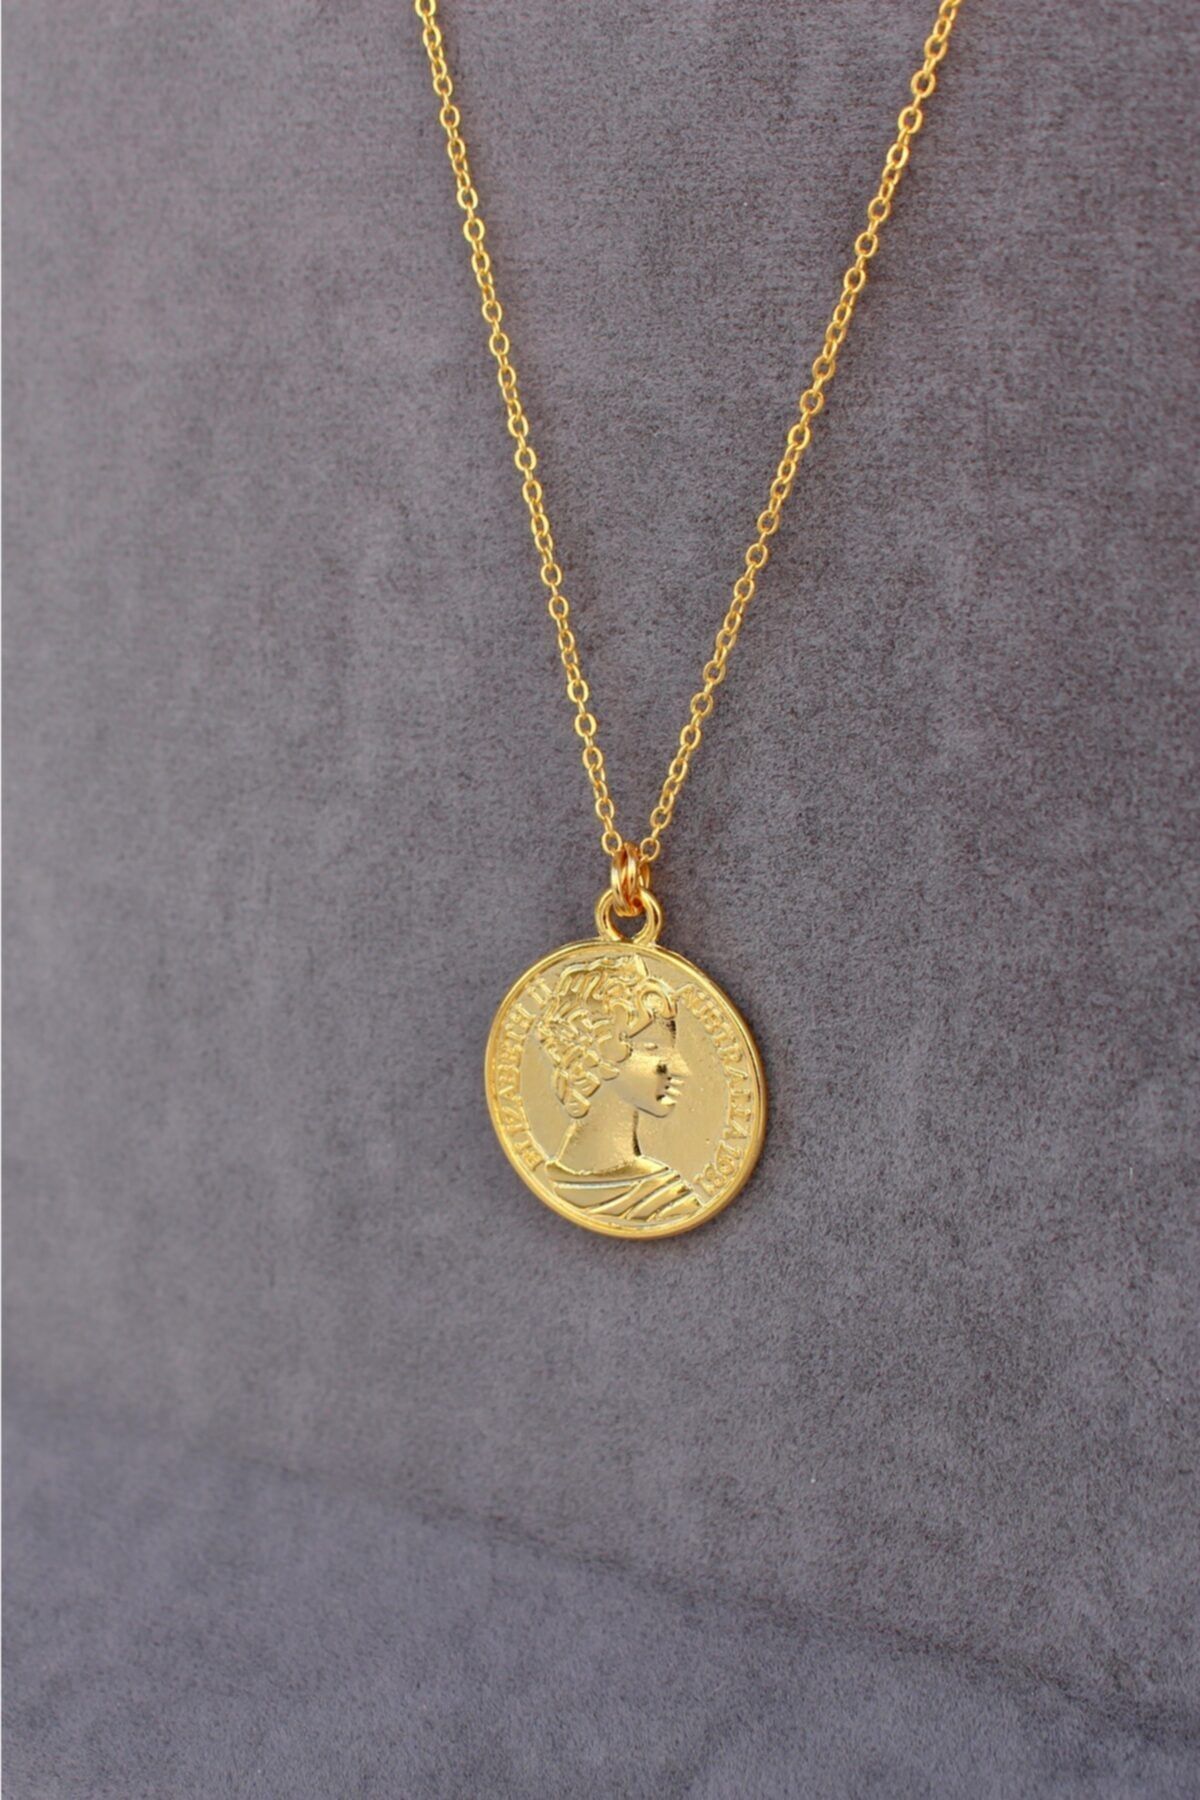 Yelda's Altın kaplama madalyon kolye  - elizabeth madalyon